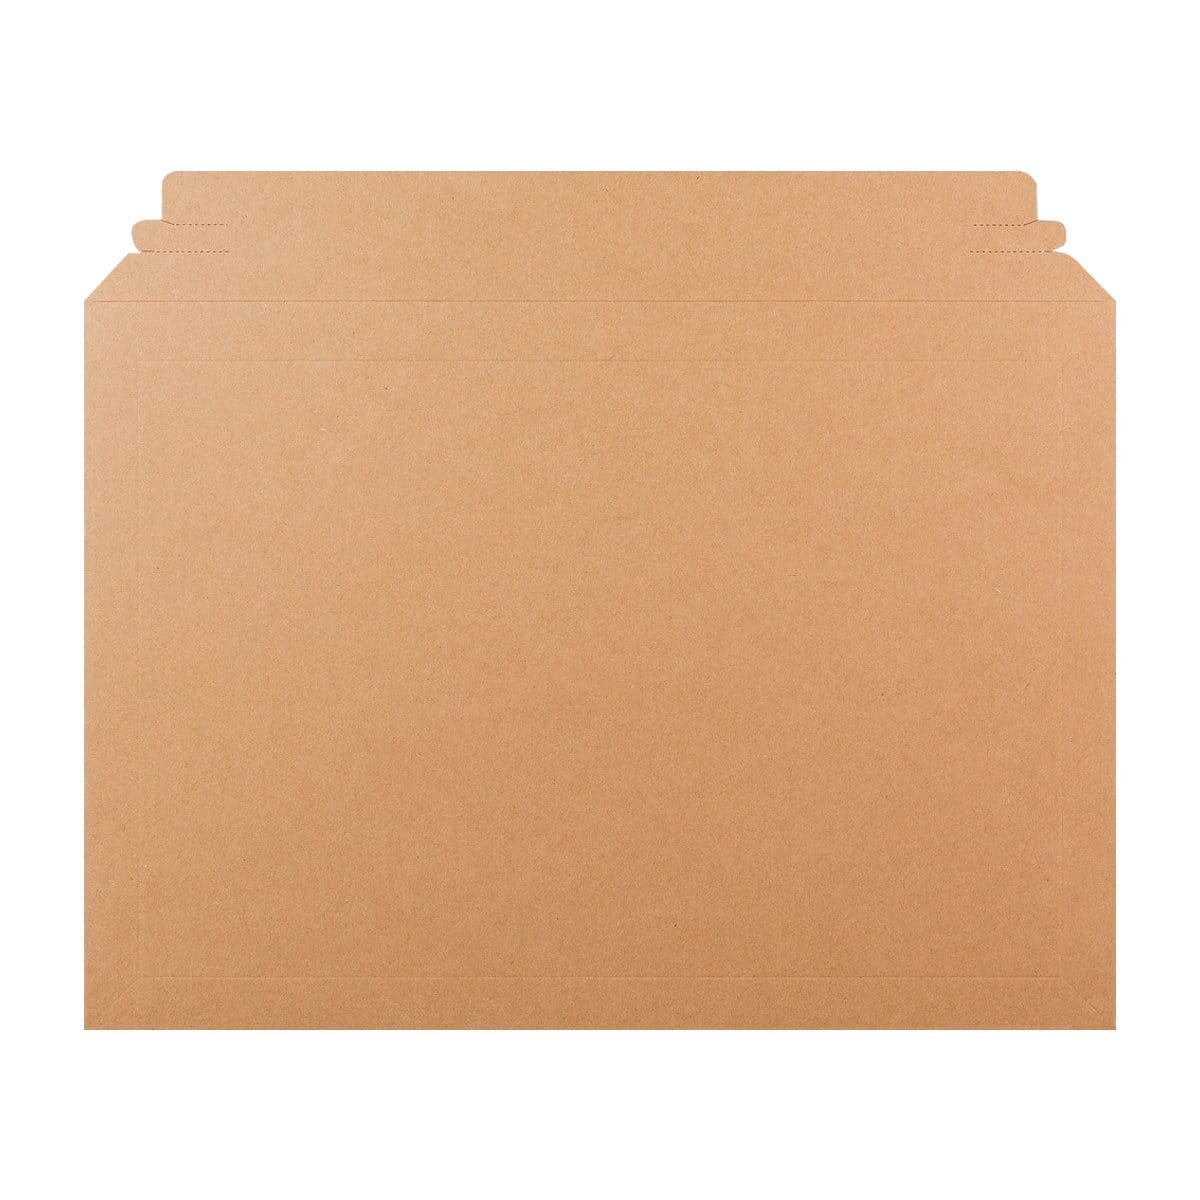 products/rigid-carboard-envelopes-249x352-b.jpg